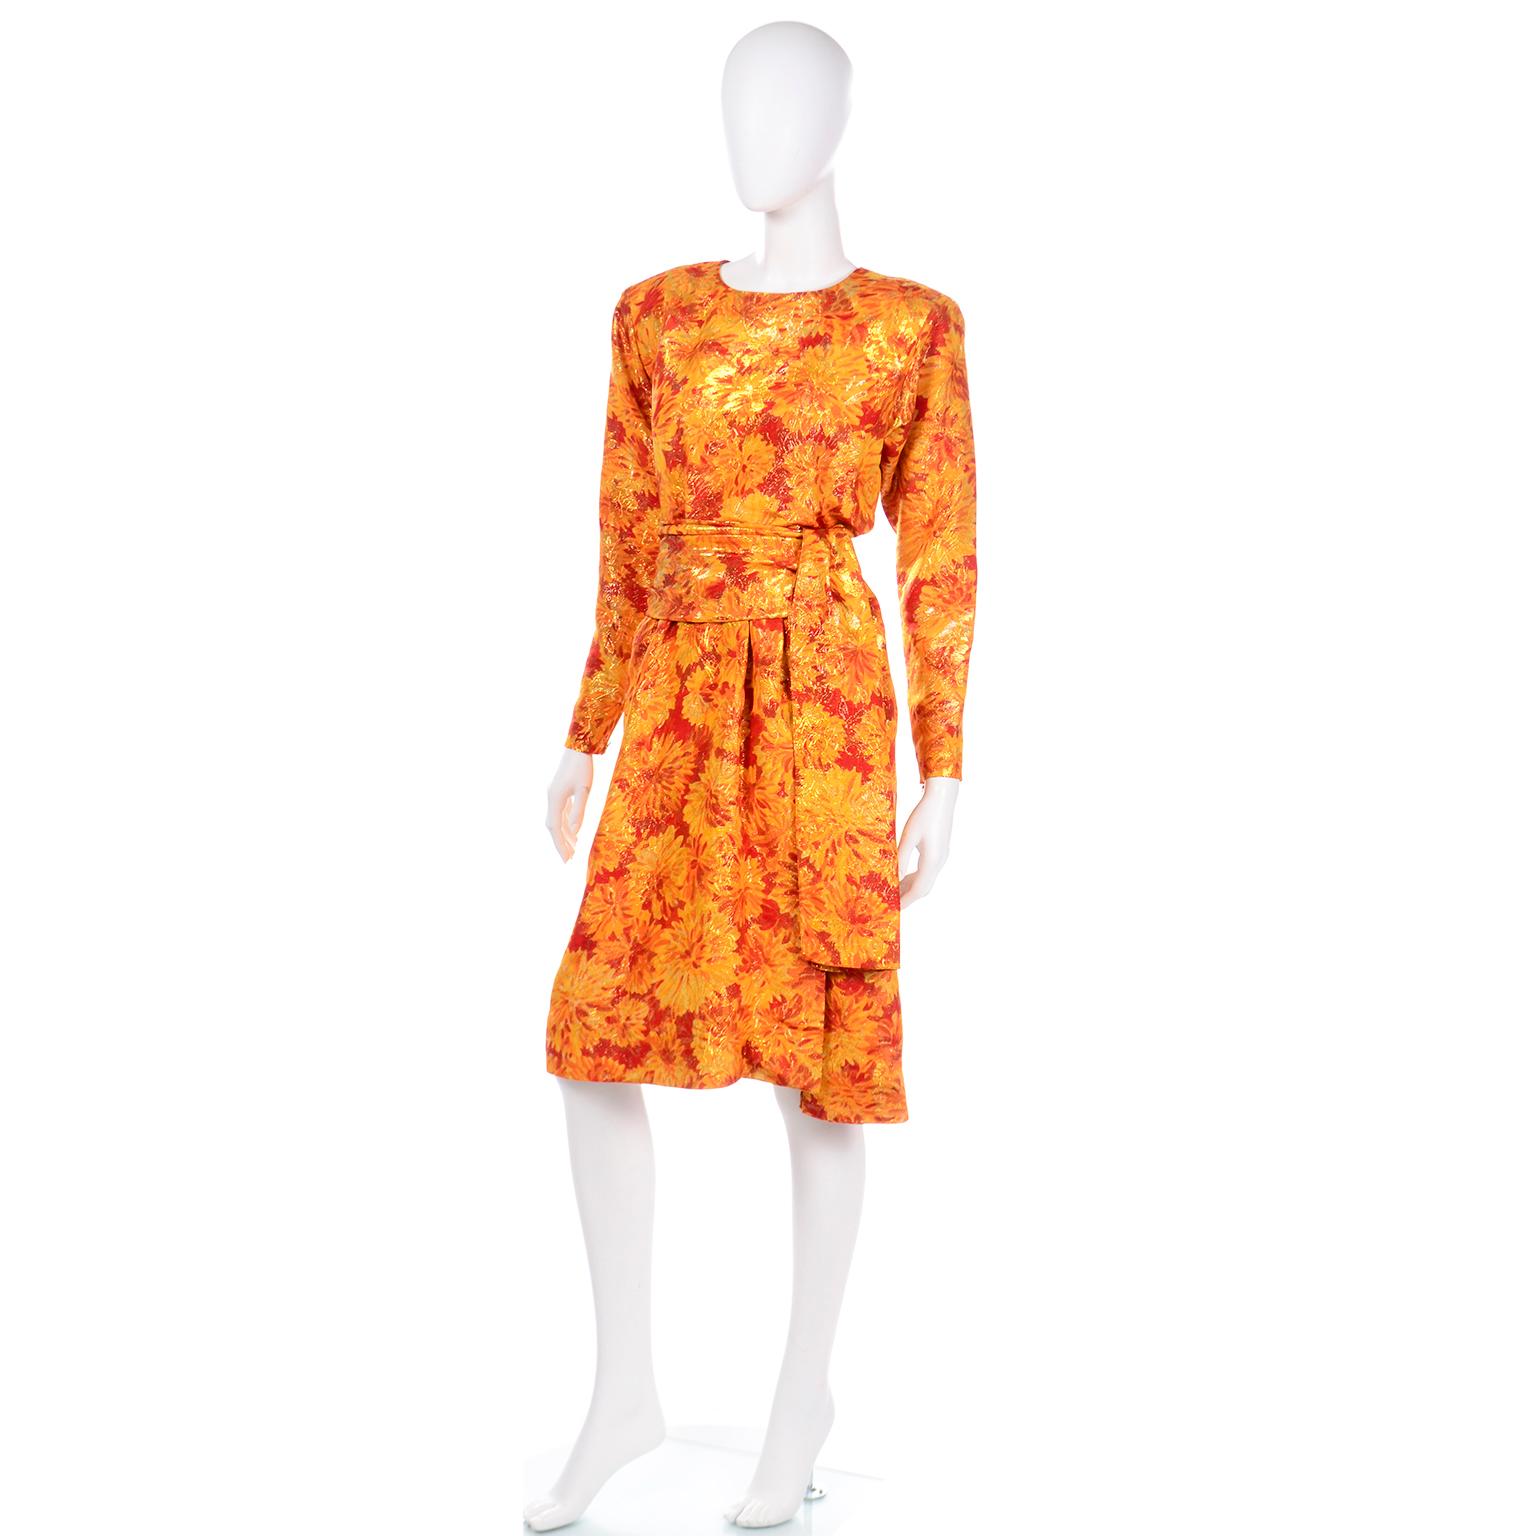 Deadstock YSL 1989 Orange Metallic Documented Yves Saint Laurent Runway Dress For Sale 1